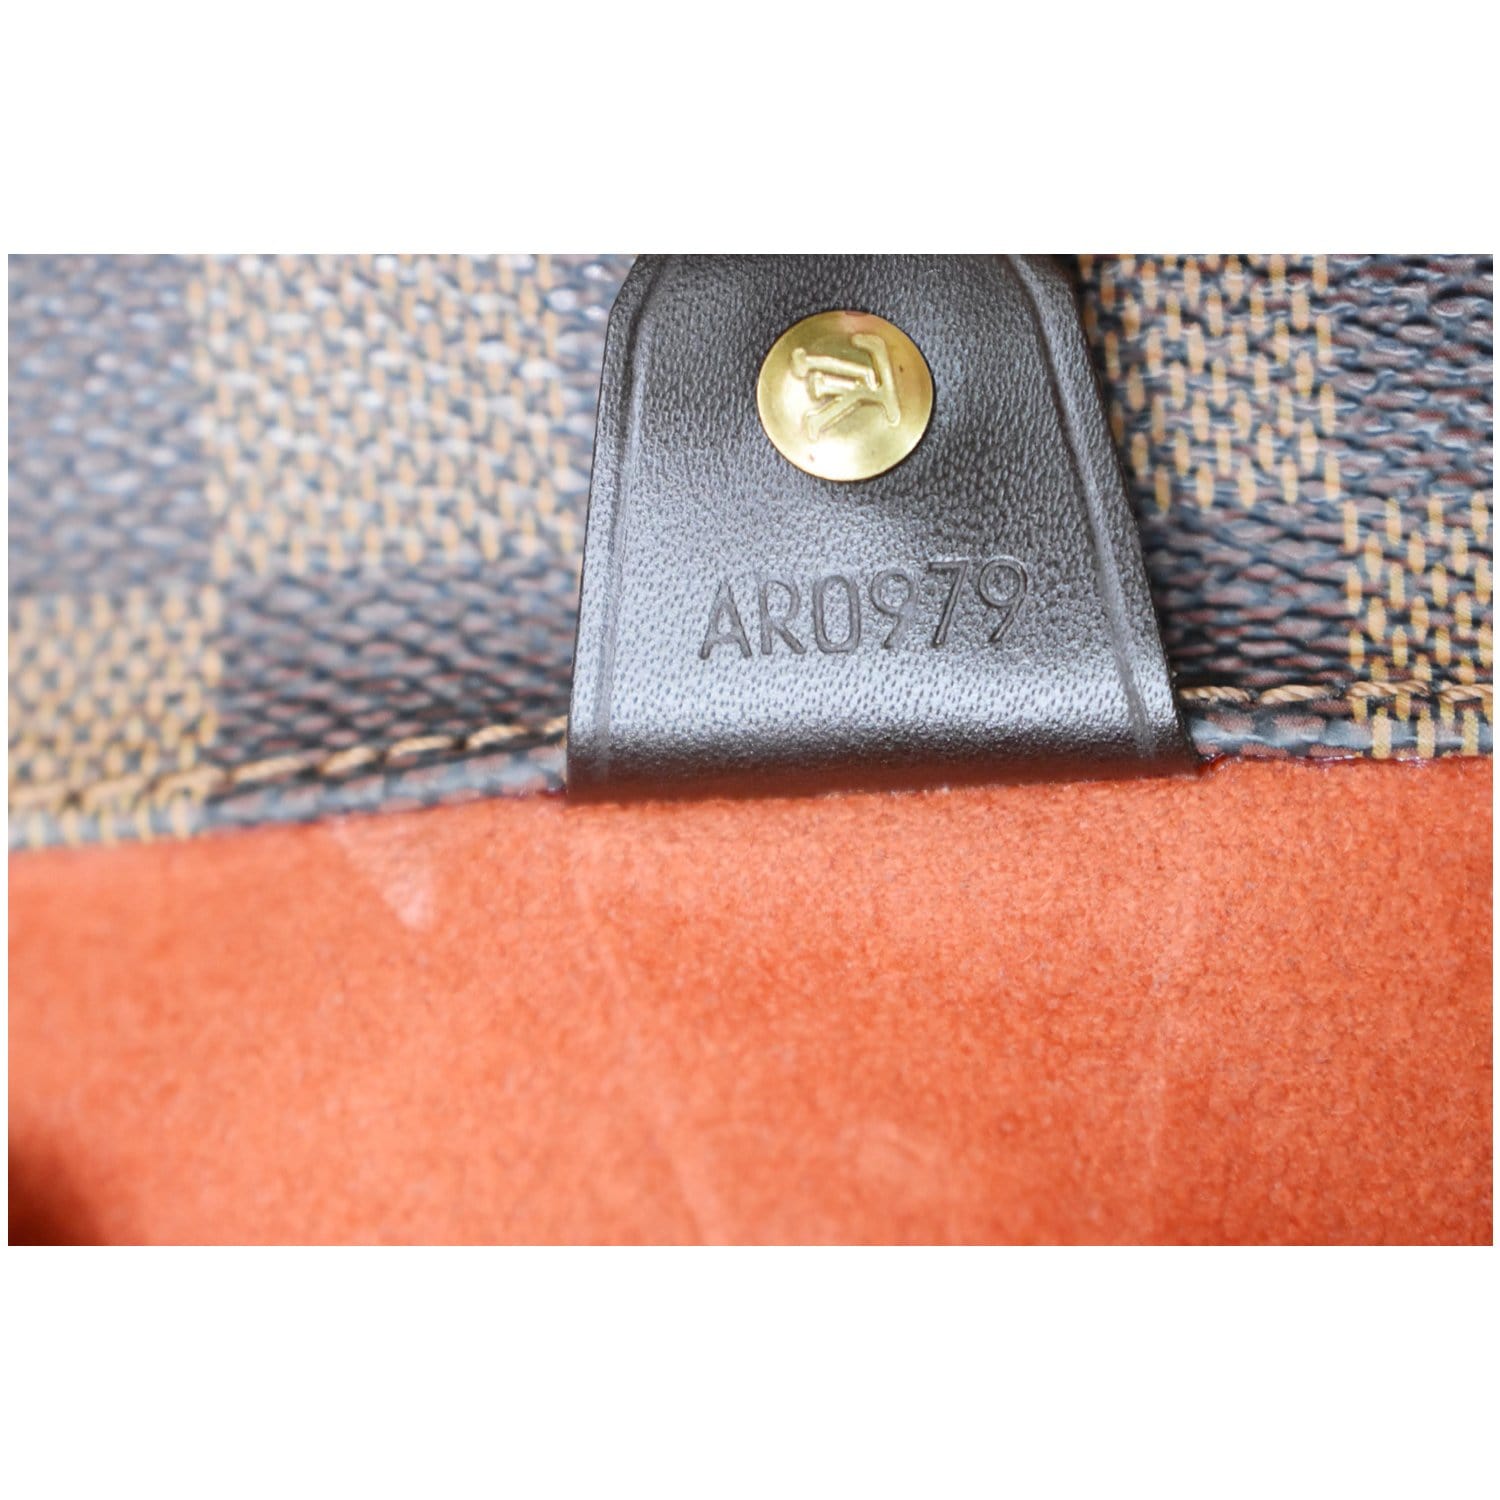 Brown Louis Vuitton Damier Ebene Parioli PM Shoulder Bag – Designer Revival